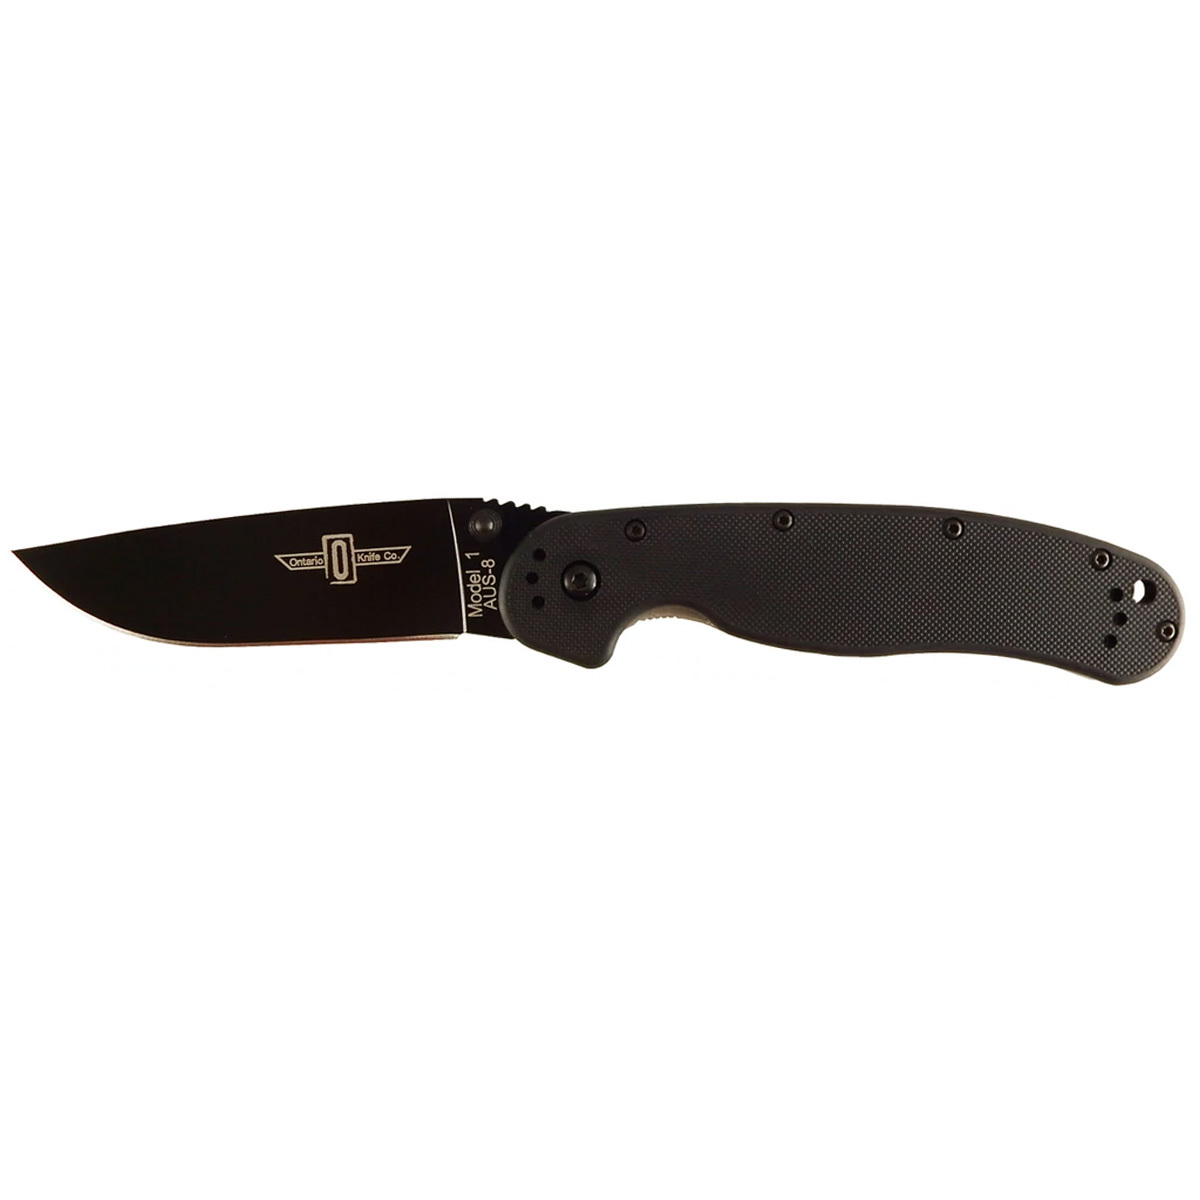 Нож Ontario 8846 RAT 1 Black нож с фиксированным клинком ontario ns 9 black canvas micarta handle